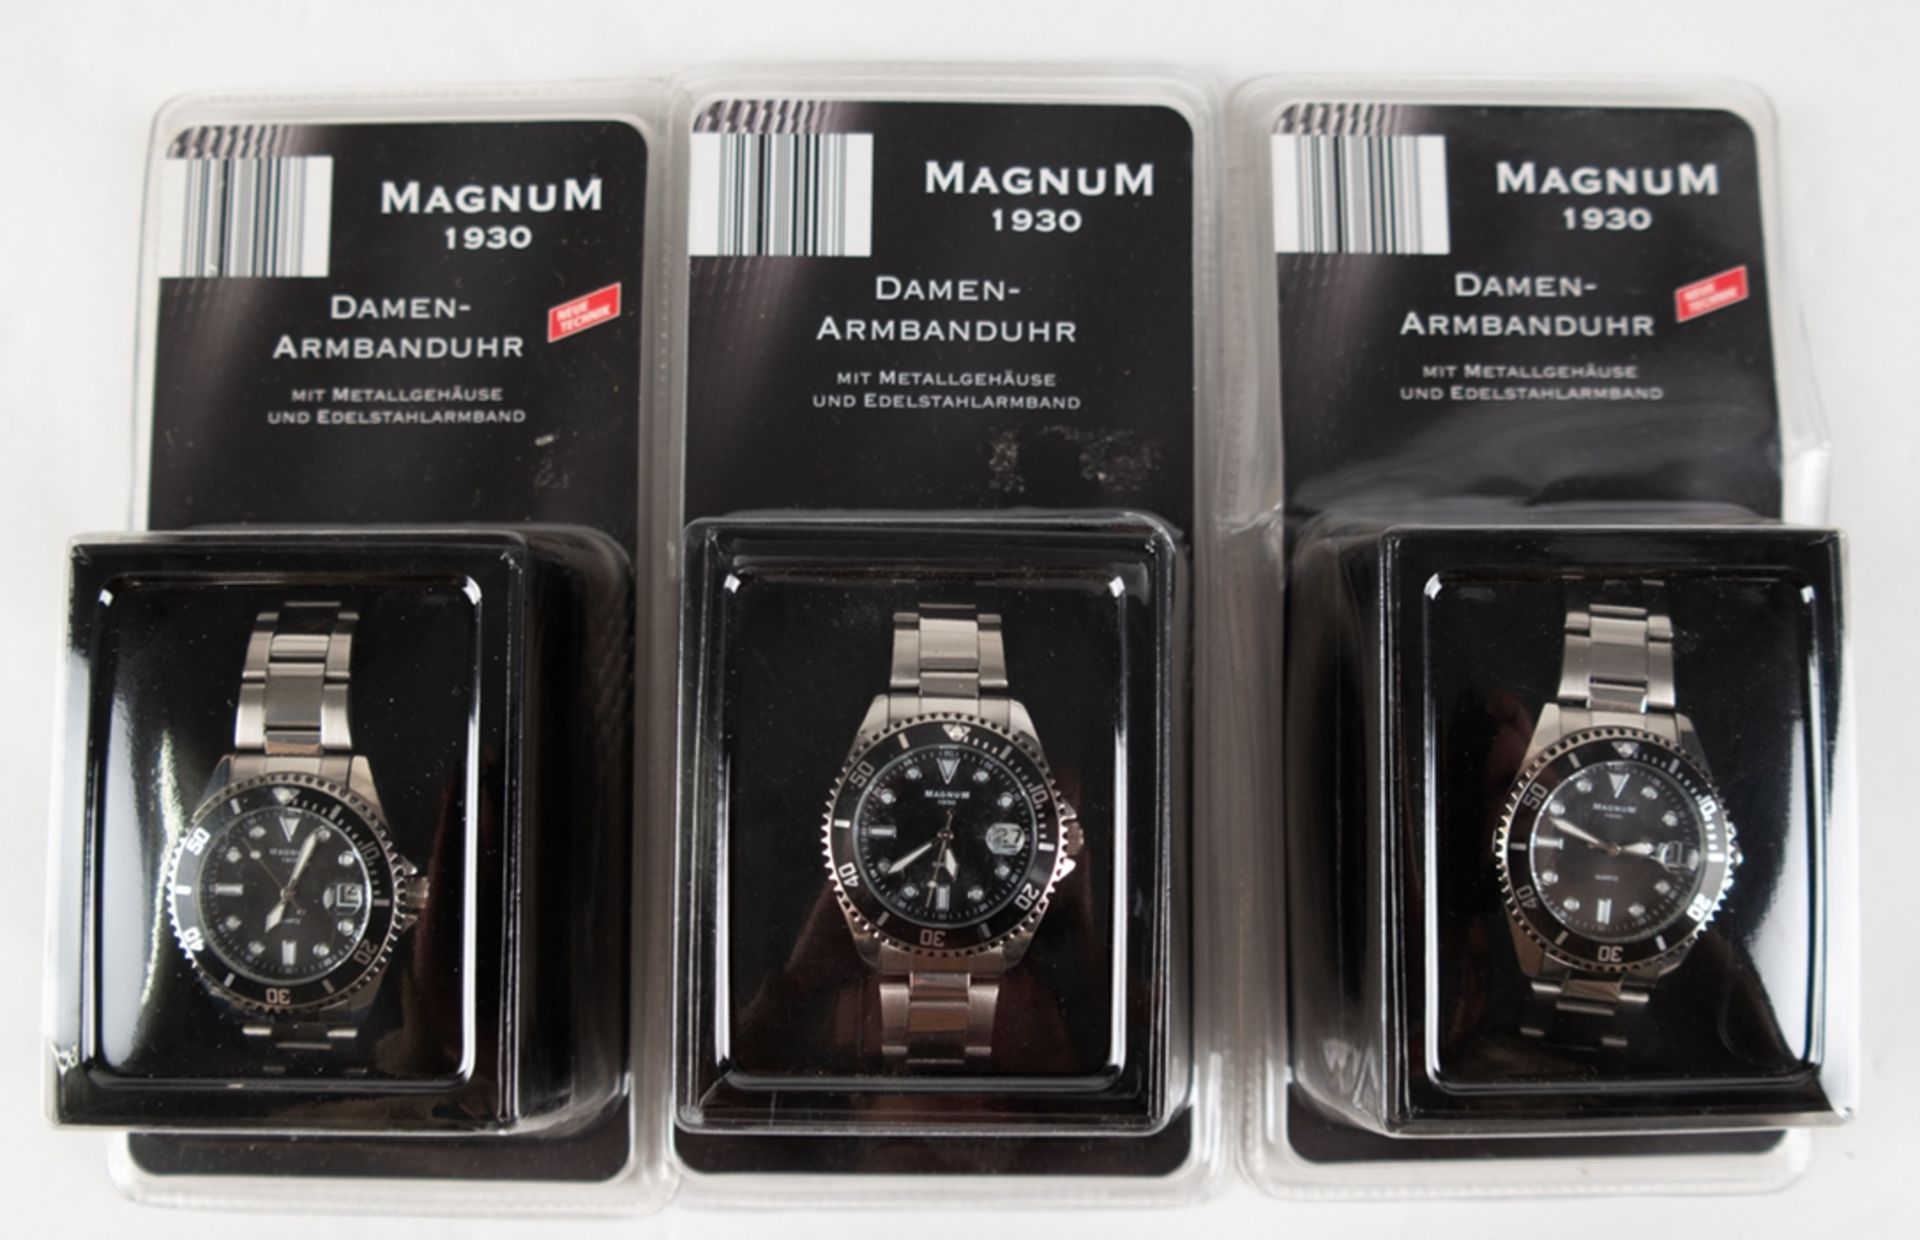 3 Damen-Armbanduhren "Magnum 1930", Quarz, Metallgehäuse, Edelstahlarmband, blaues bzw. schwarzes Z